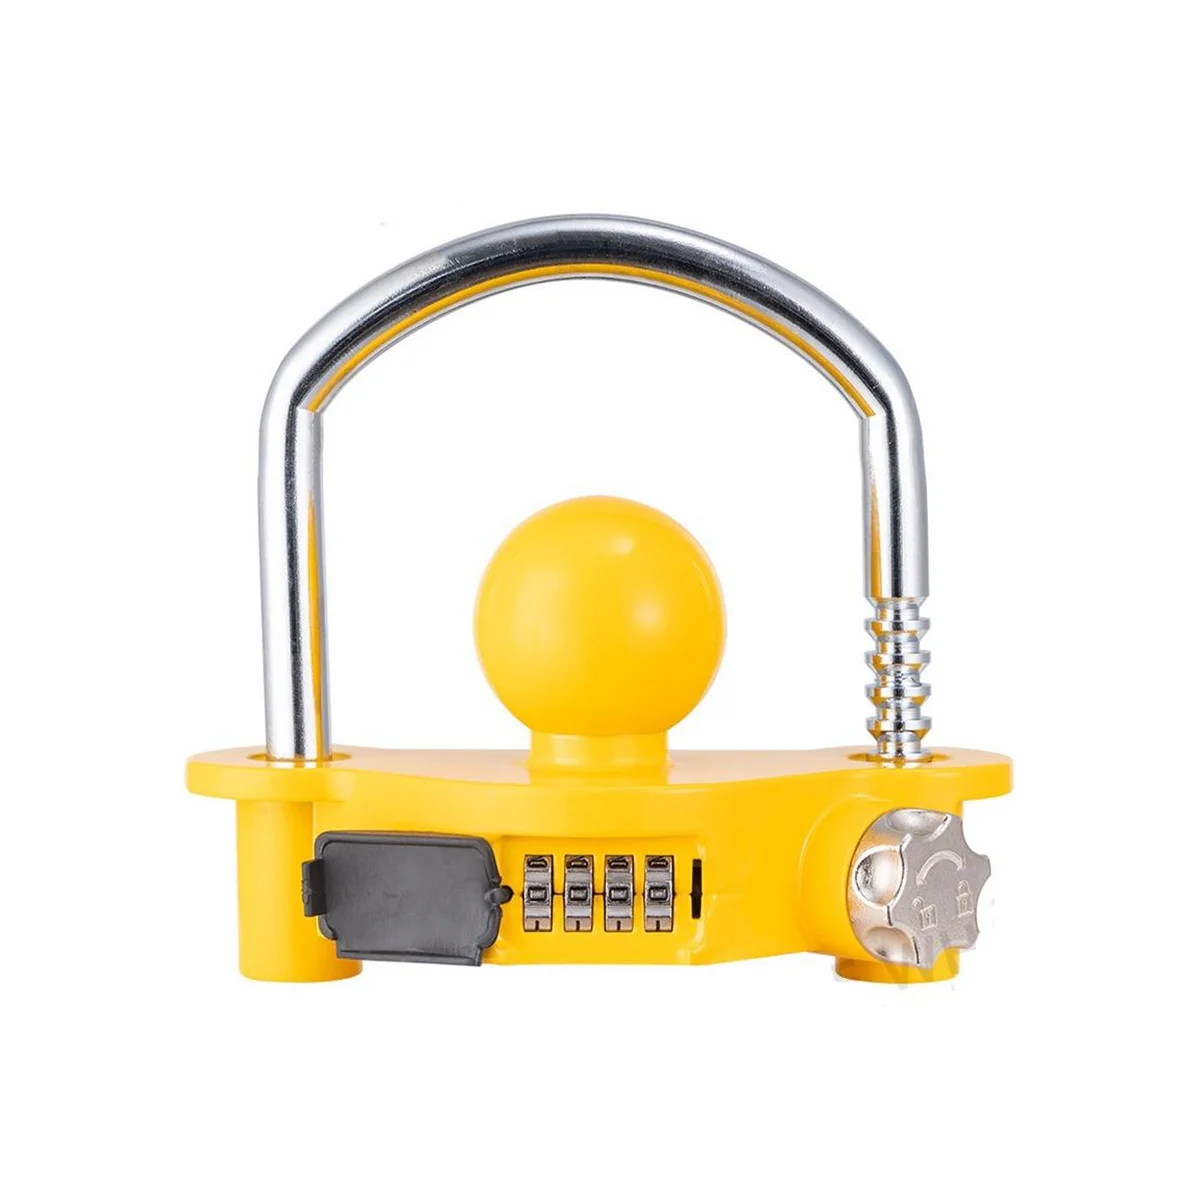 

Combination Trailer Lock RV Security Lock Dome Coupler U-Shaped Dome Lock Flower Basket Lock Trailer Lock Auto Supplies